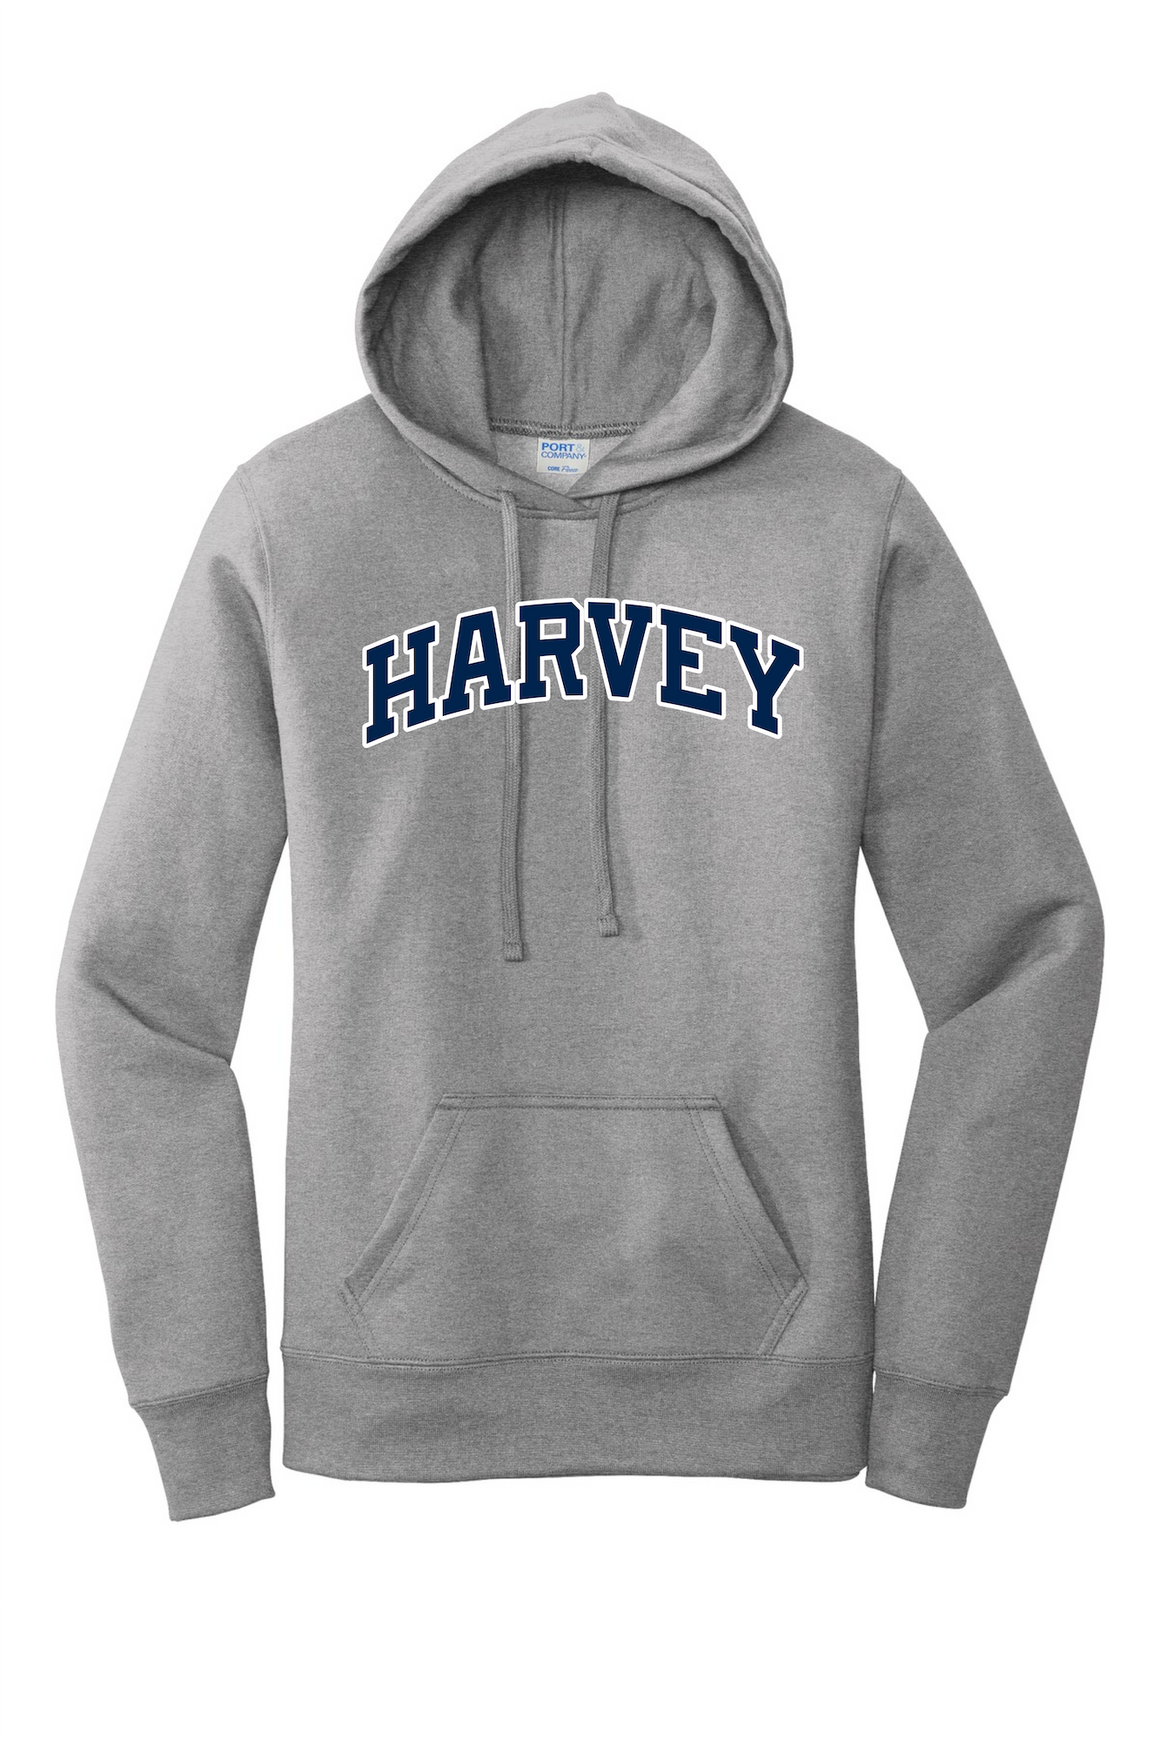 Harvey School Women's Vintage Arc Logo Applique Hoodie